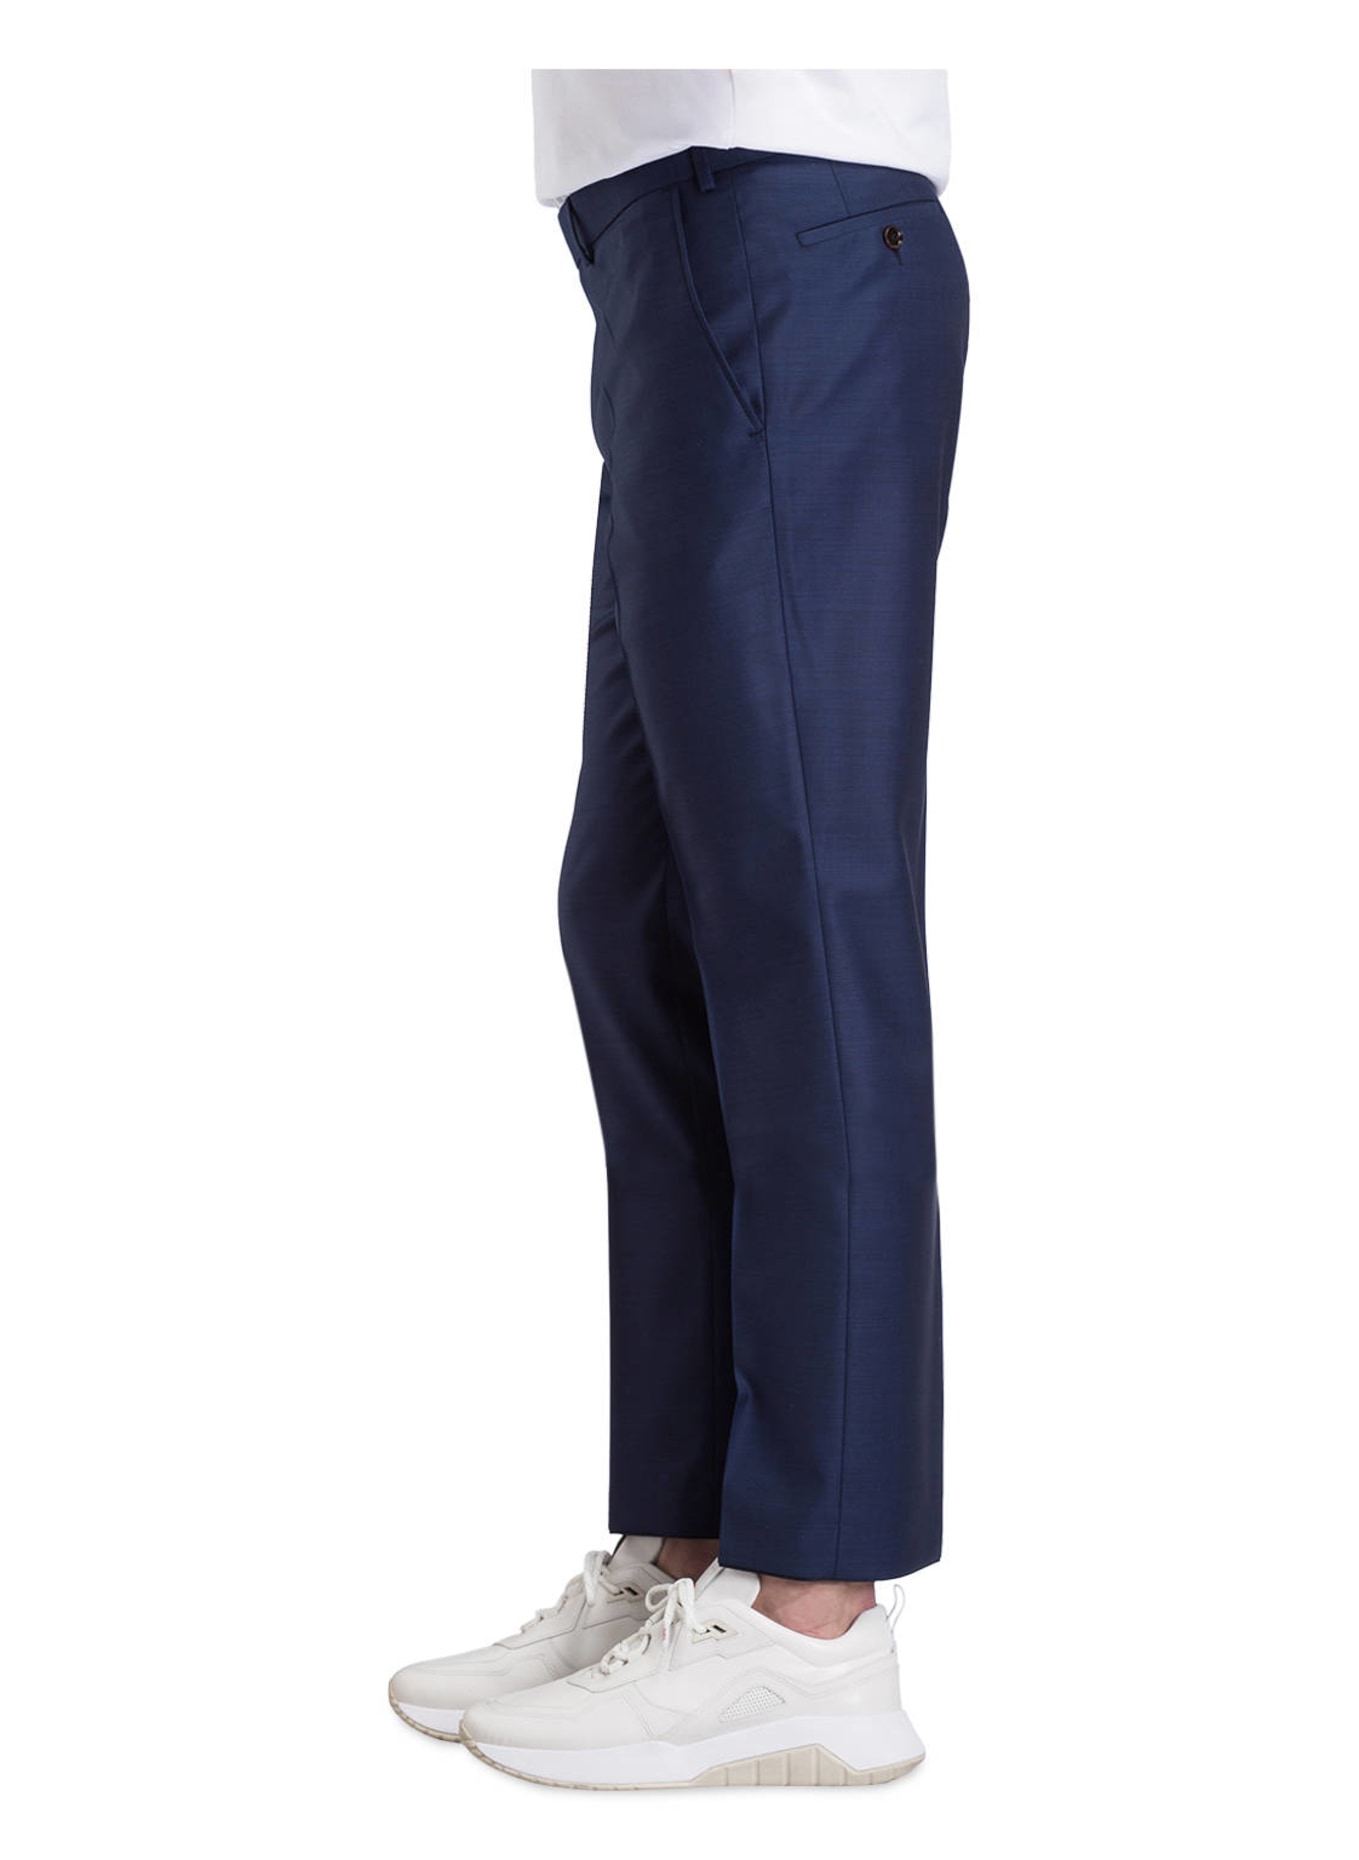 EDUARD DRESSLER Anzughose Shaped Fit , Farbe: 045 DUNKELBLAU (Bild 5)